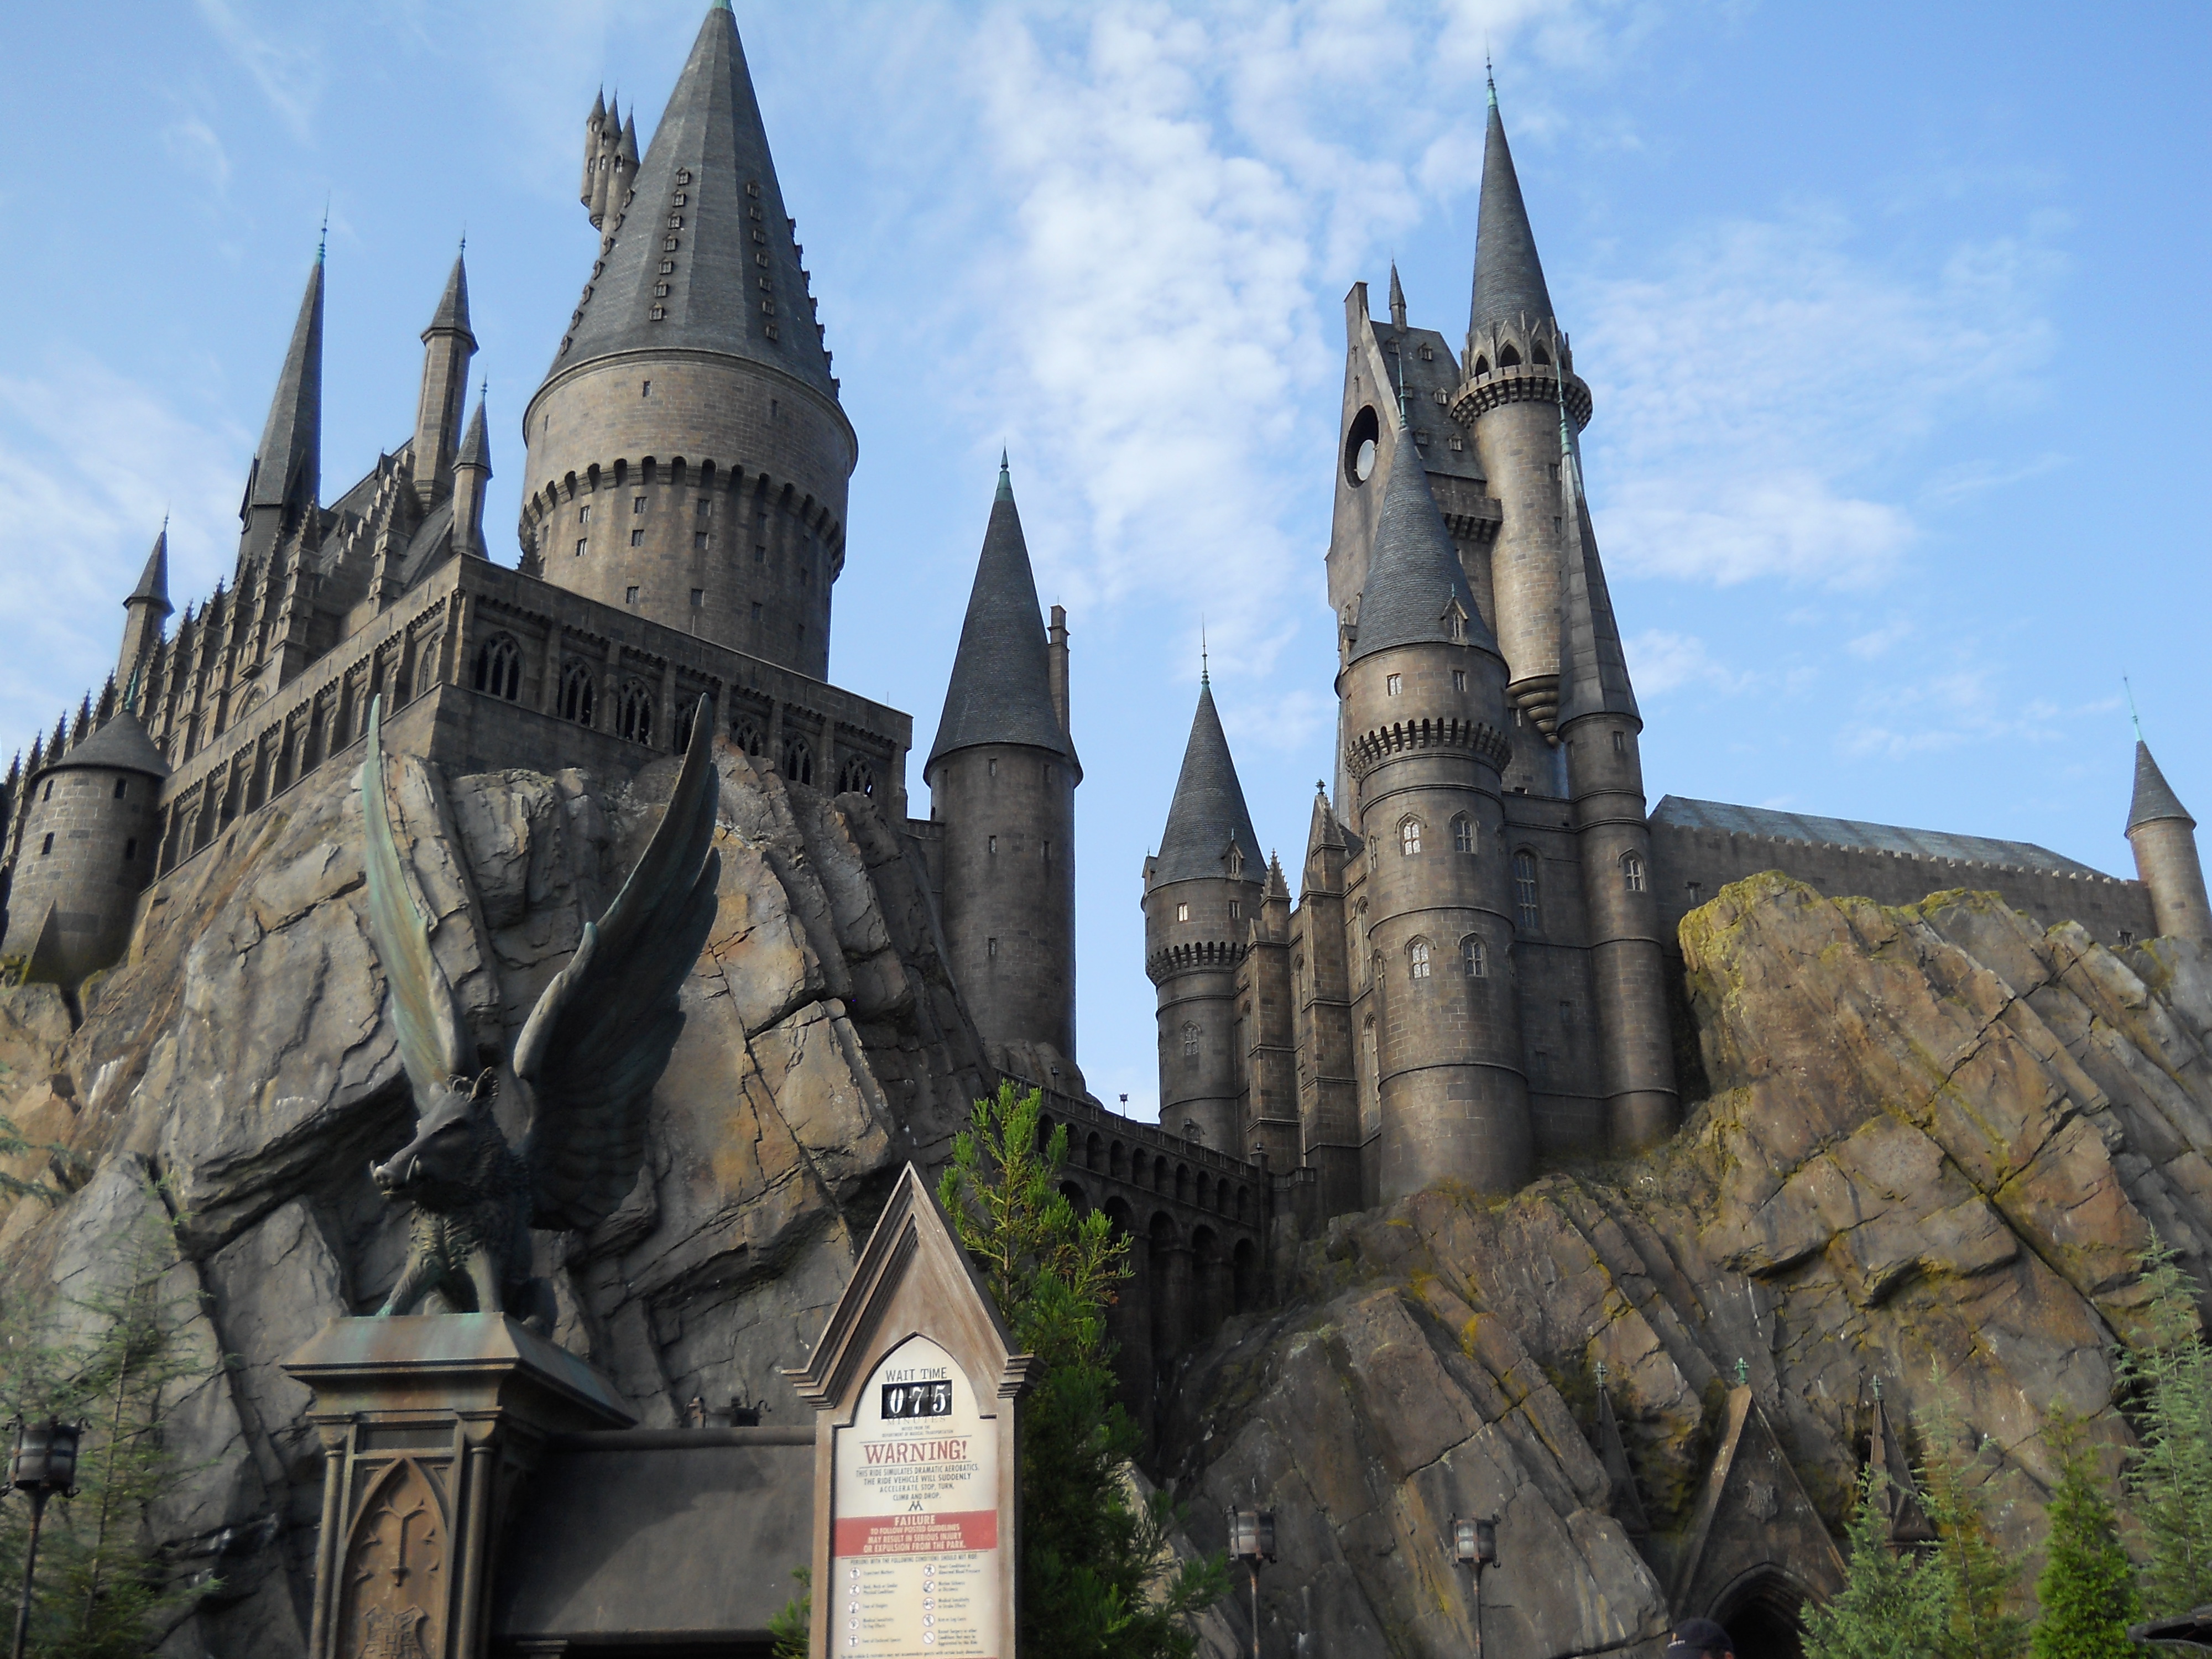 2011-07-1108.26.04.jpg - Wizarding World of Harry Potter